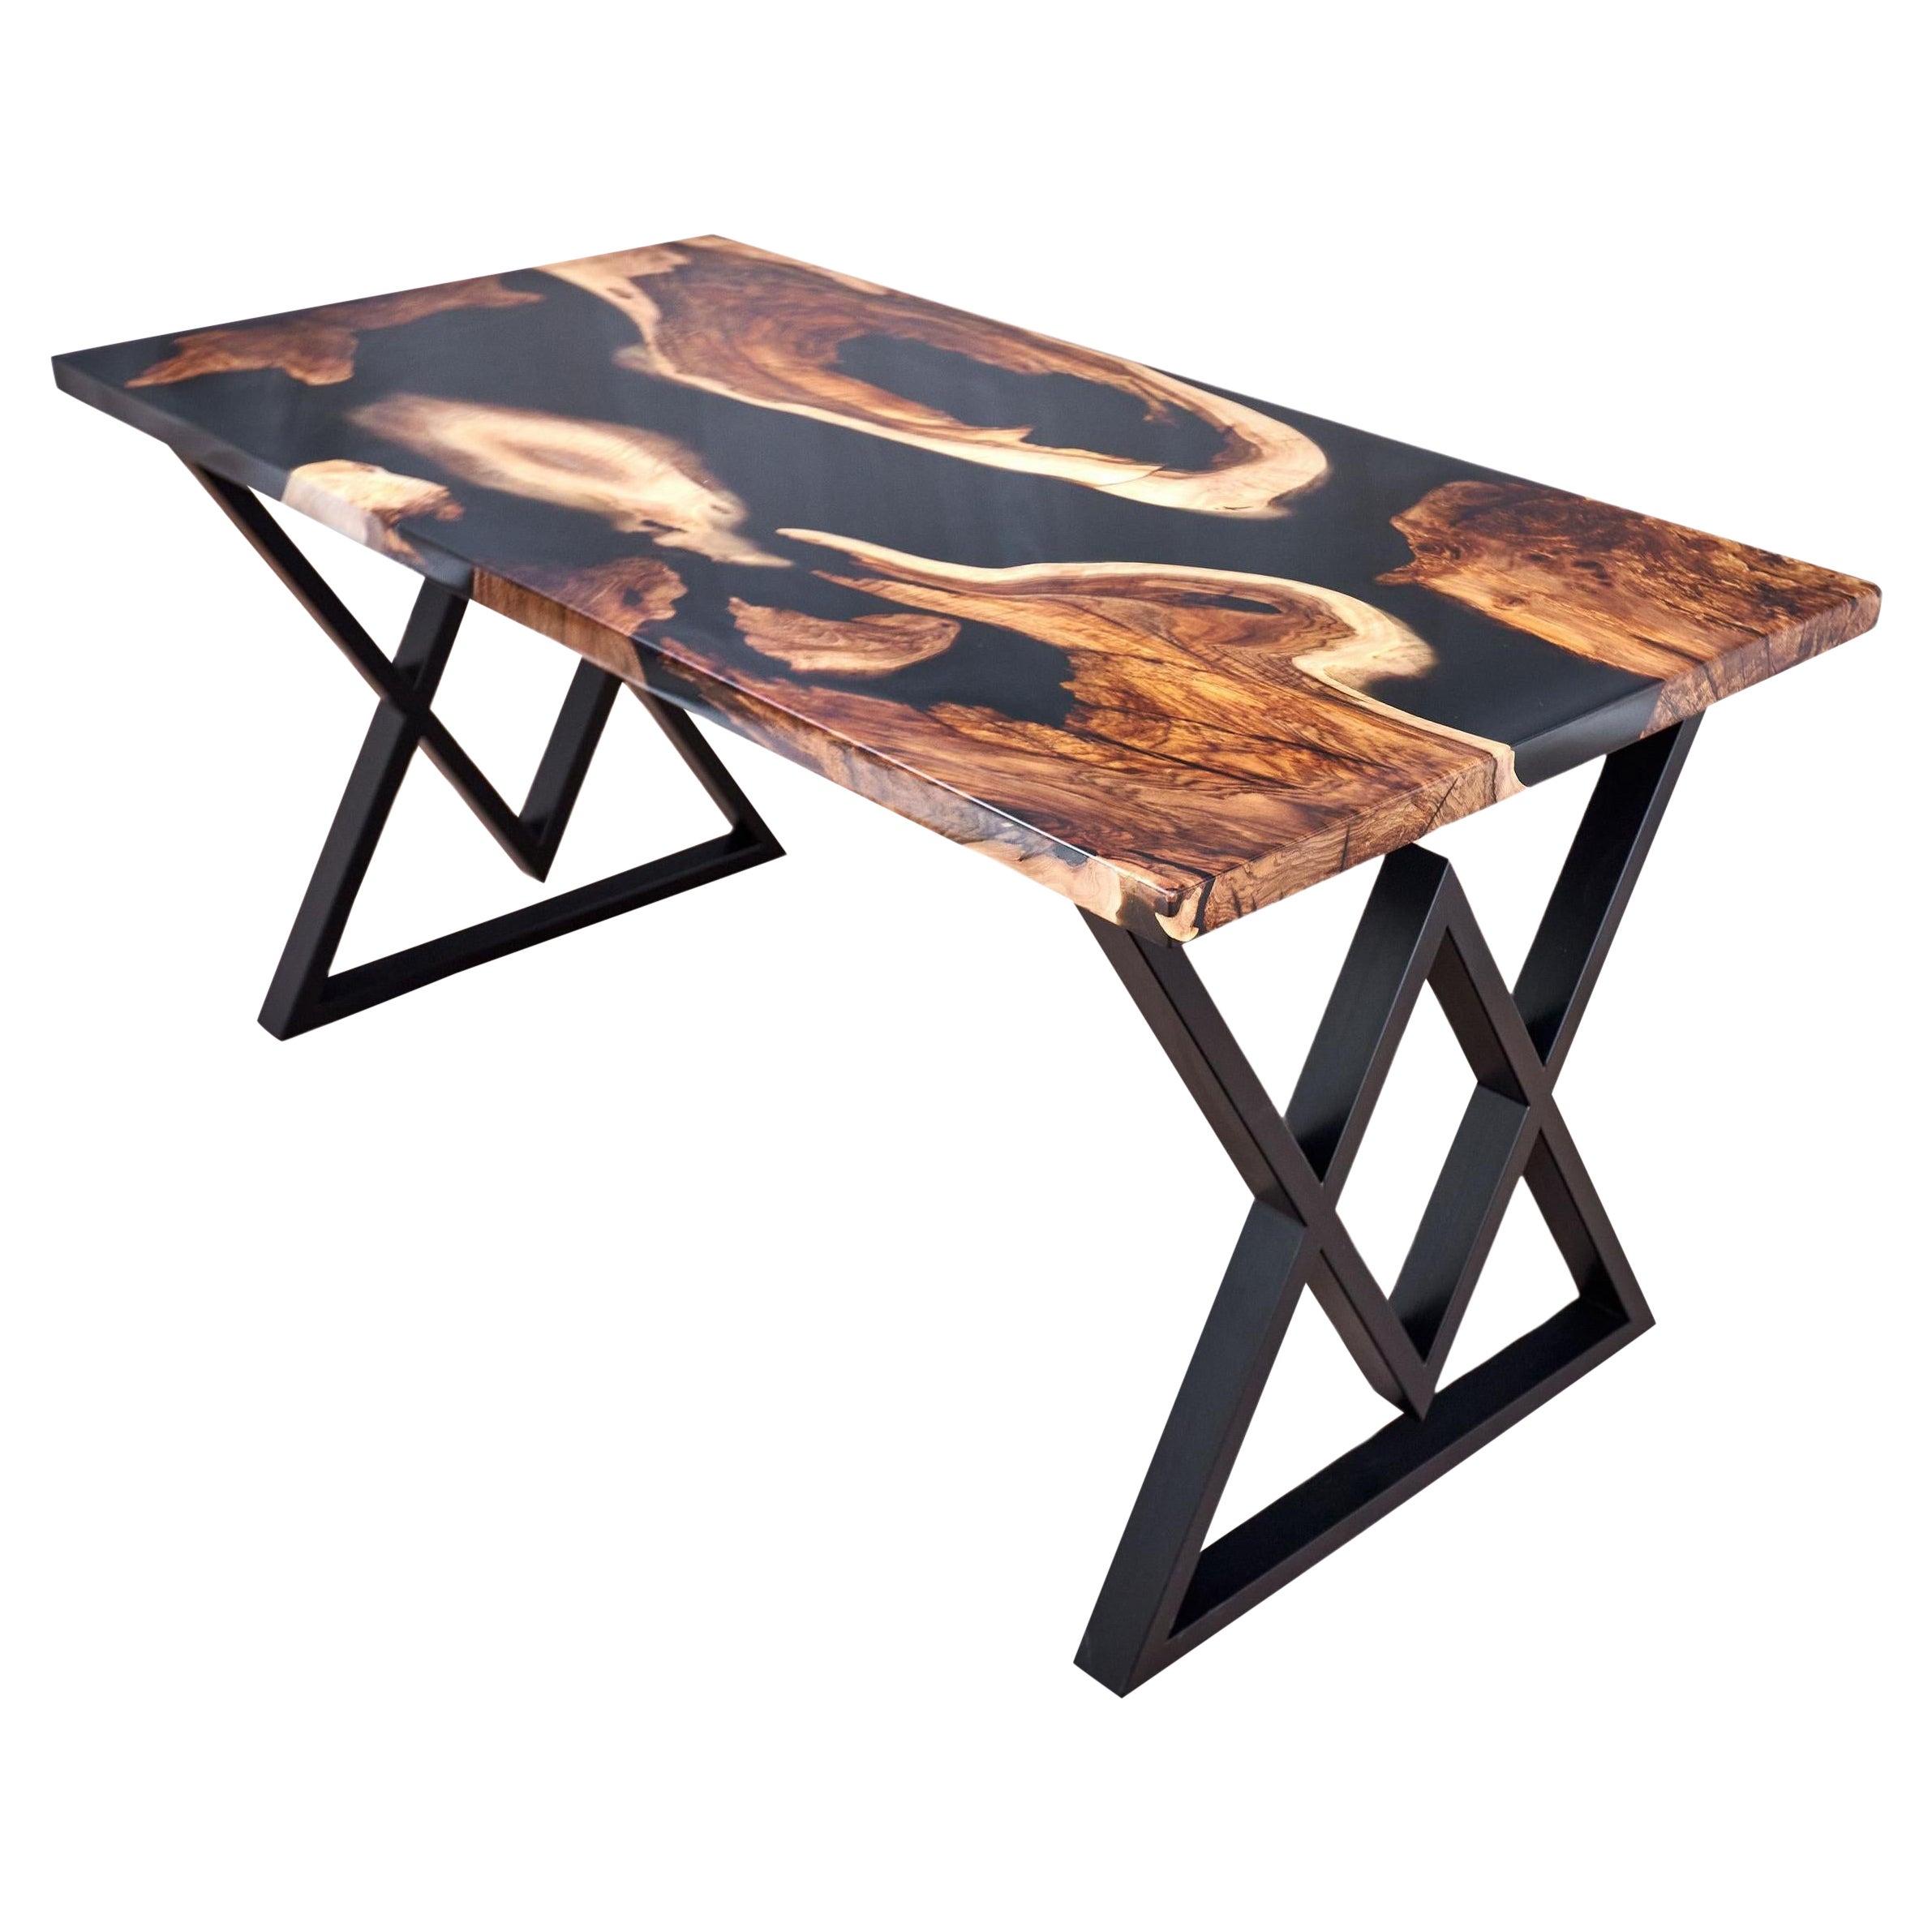 Table de salle à manger The Moderns Contemporary Table de salle à manger Handmade Rustic Tables